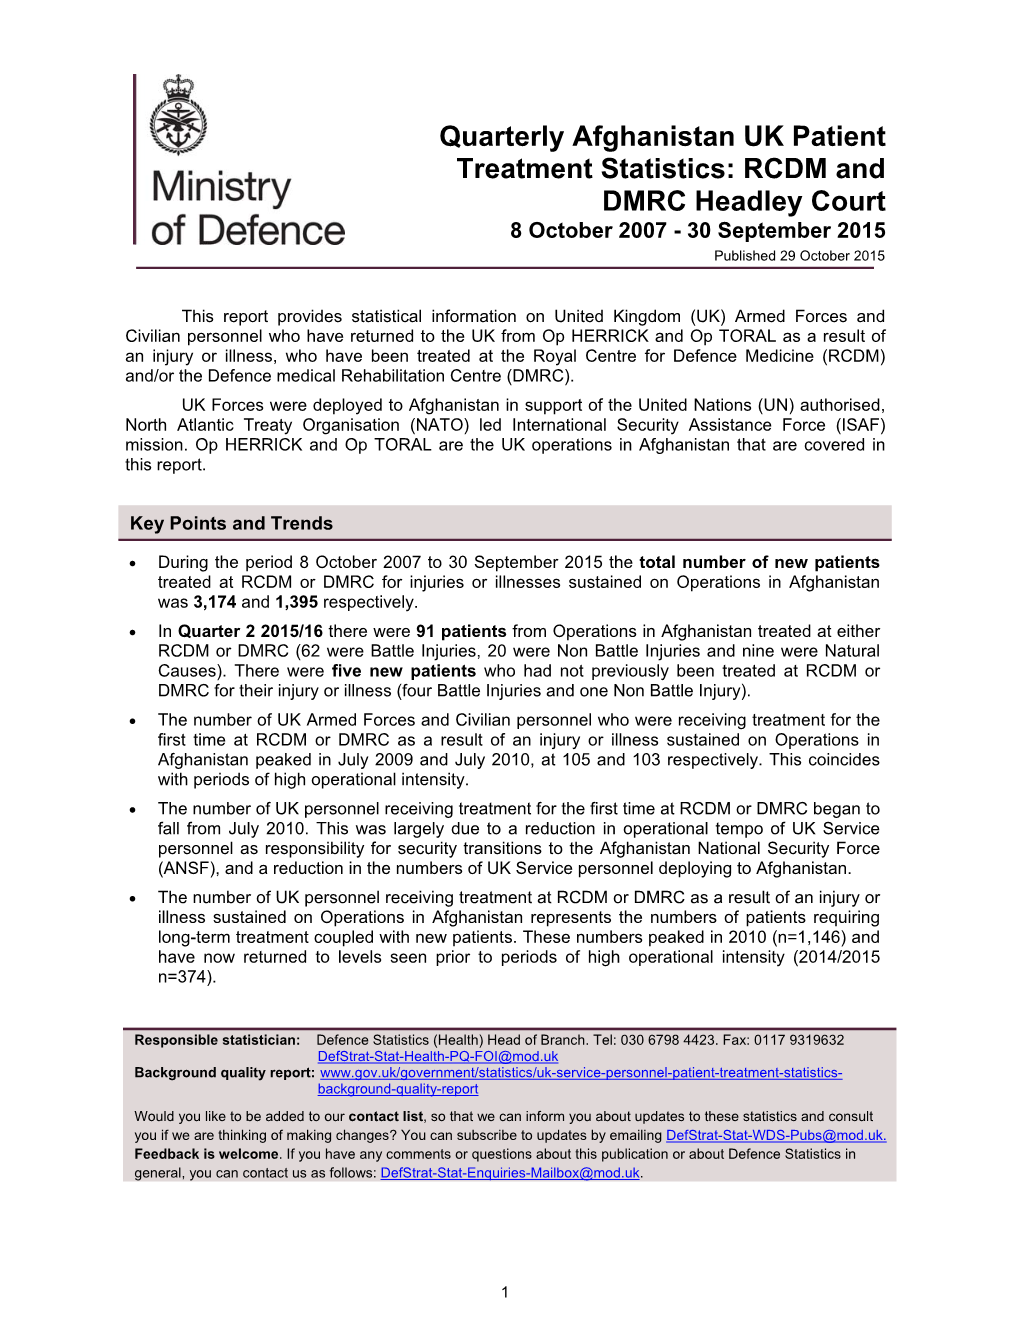 Quarterly Afghanistan UK Patient Treatment Statistics: 8 October